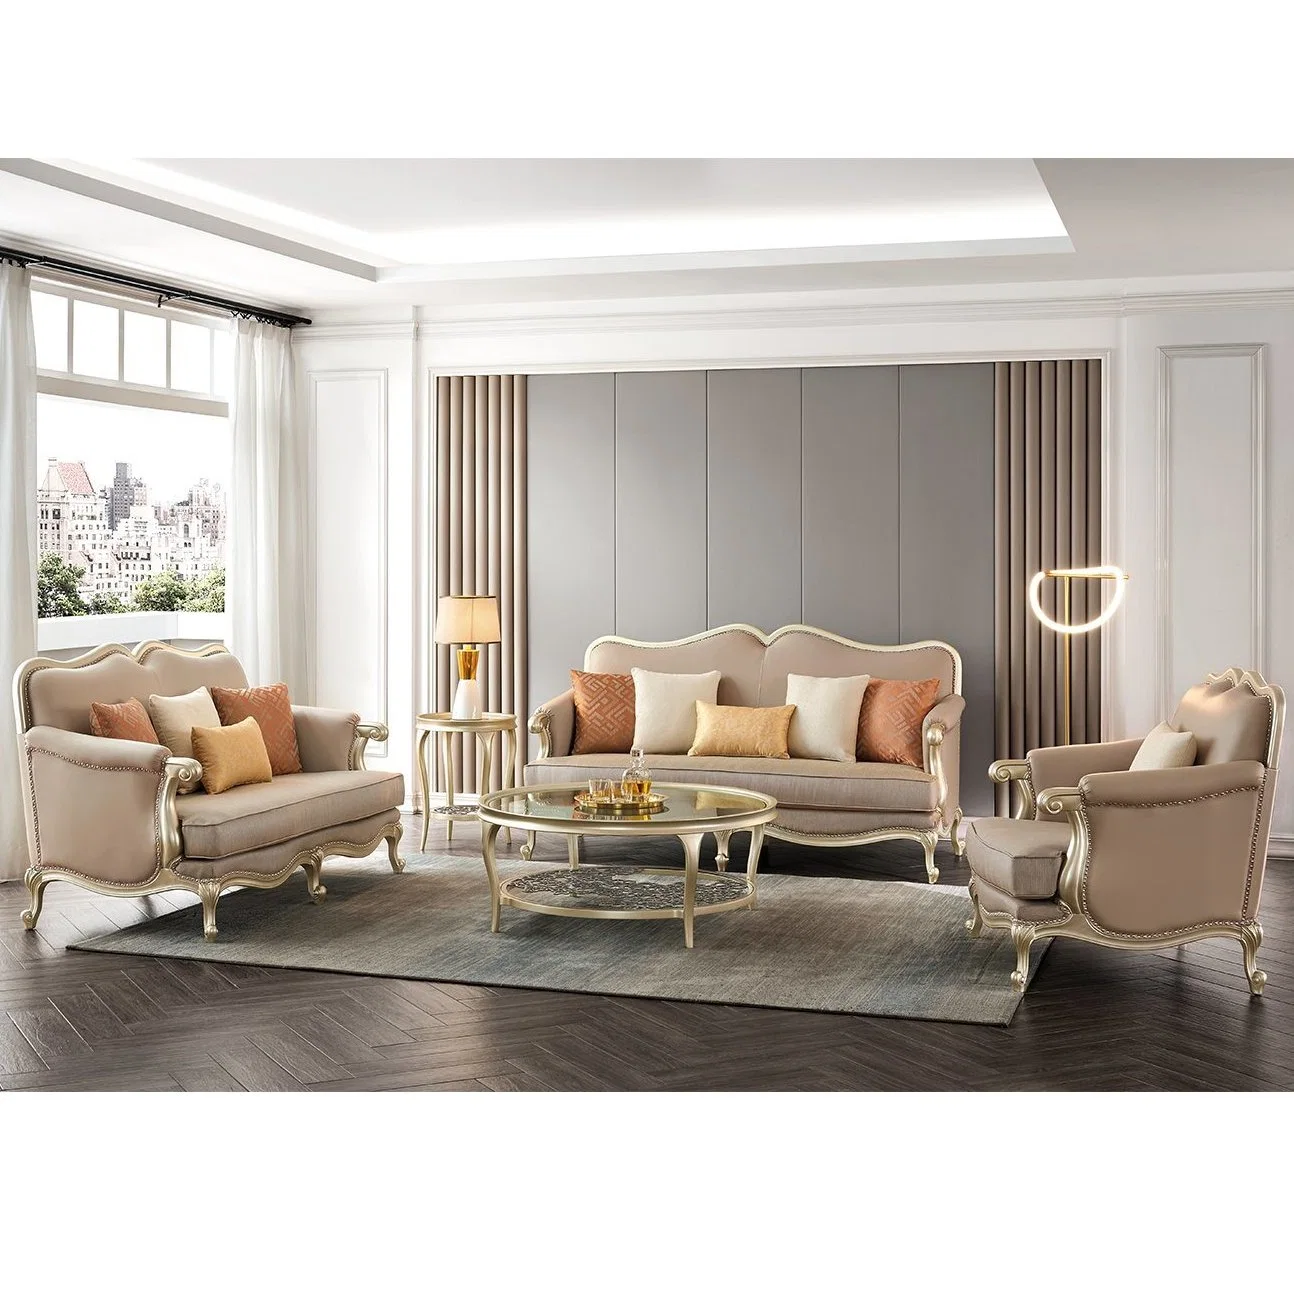 O luxo moderno conjunto de mesa em casa de madeira Sectional sofá duplo sofá de couro Sala Escura